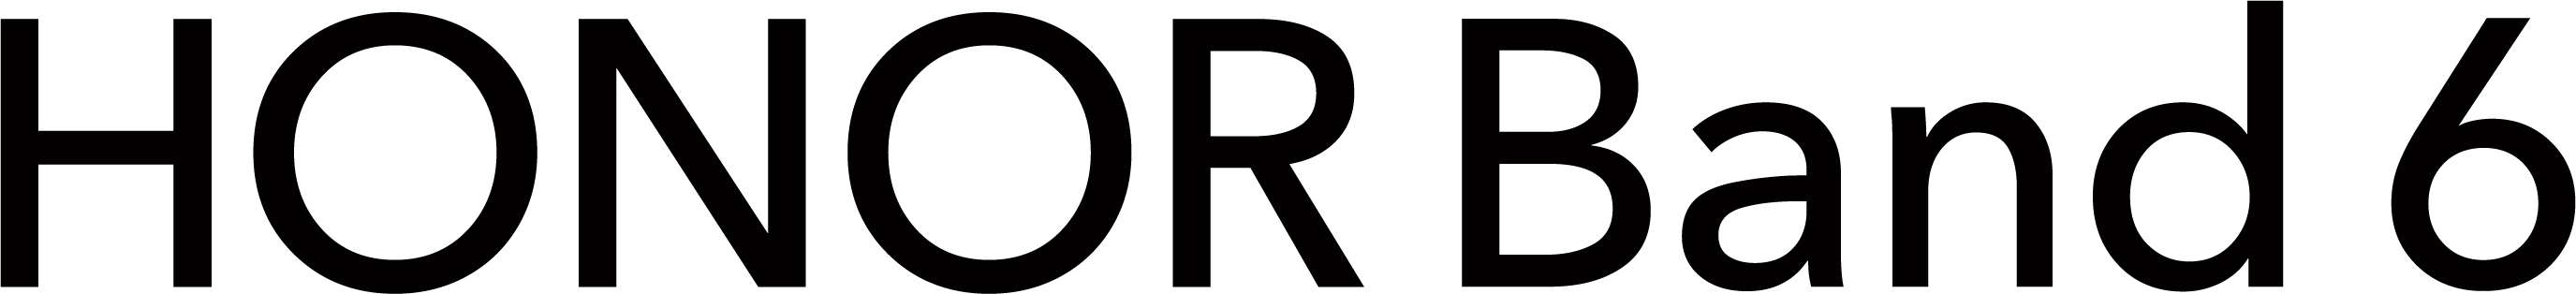 HONOR Band 6 logo